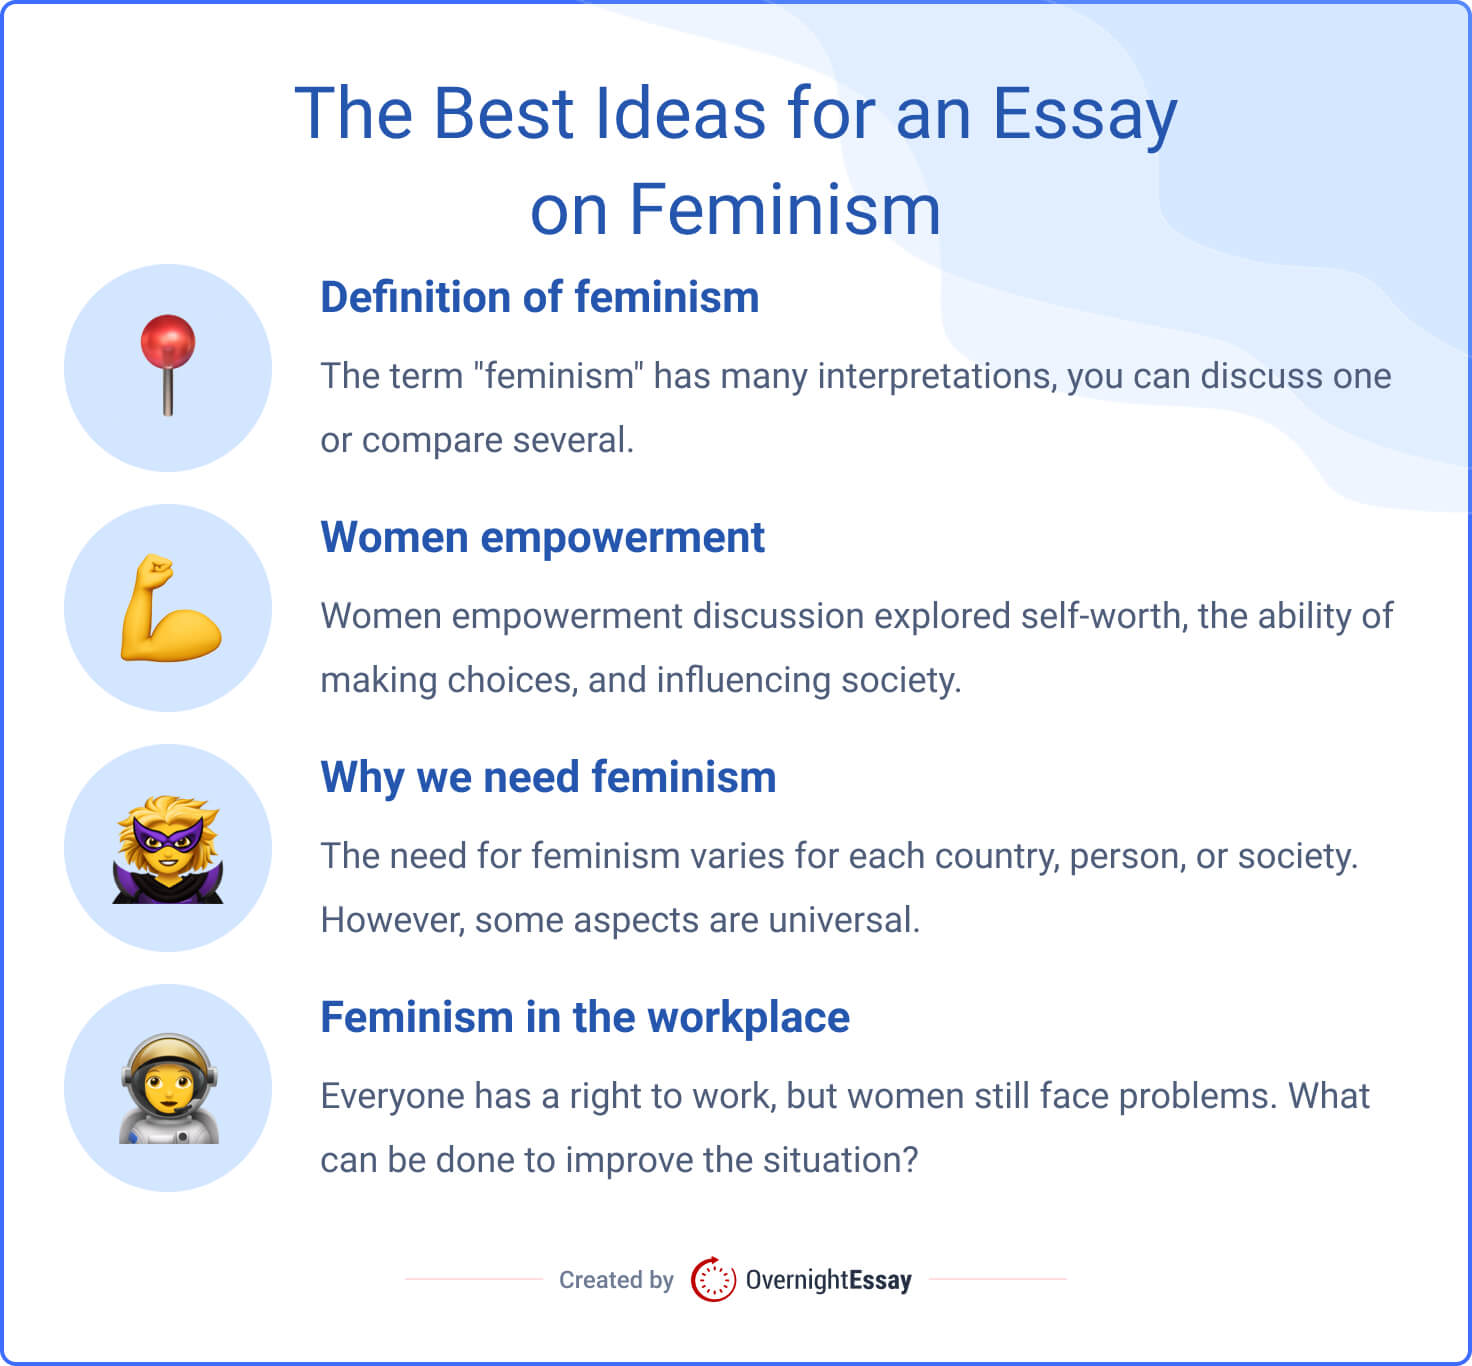 topics related to women empowerment